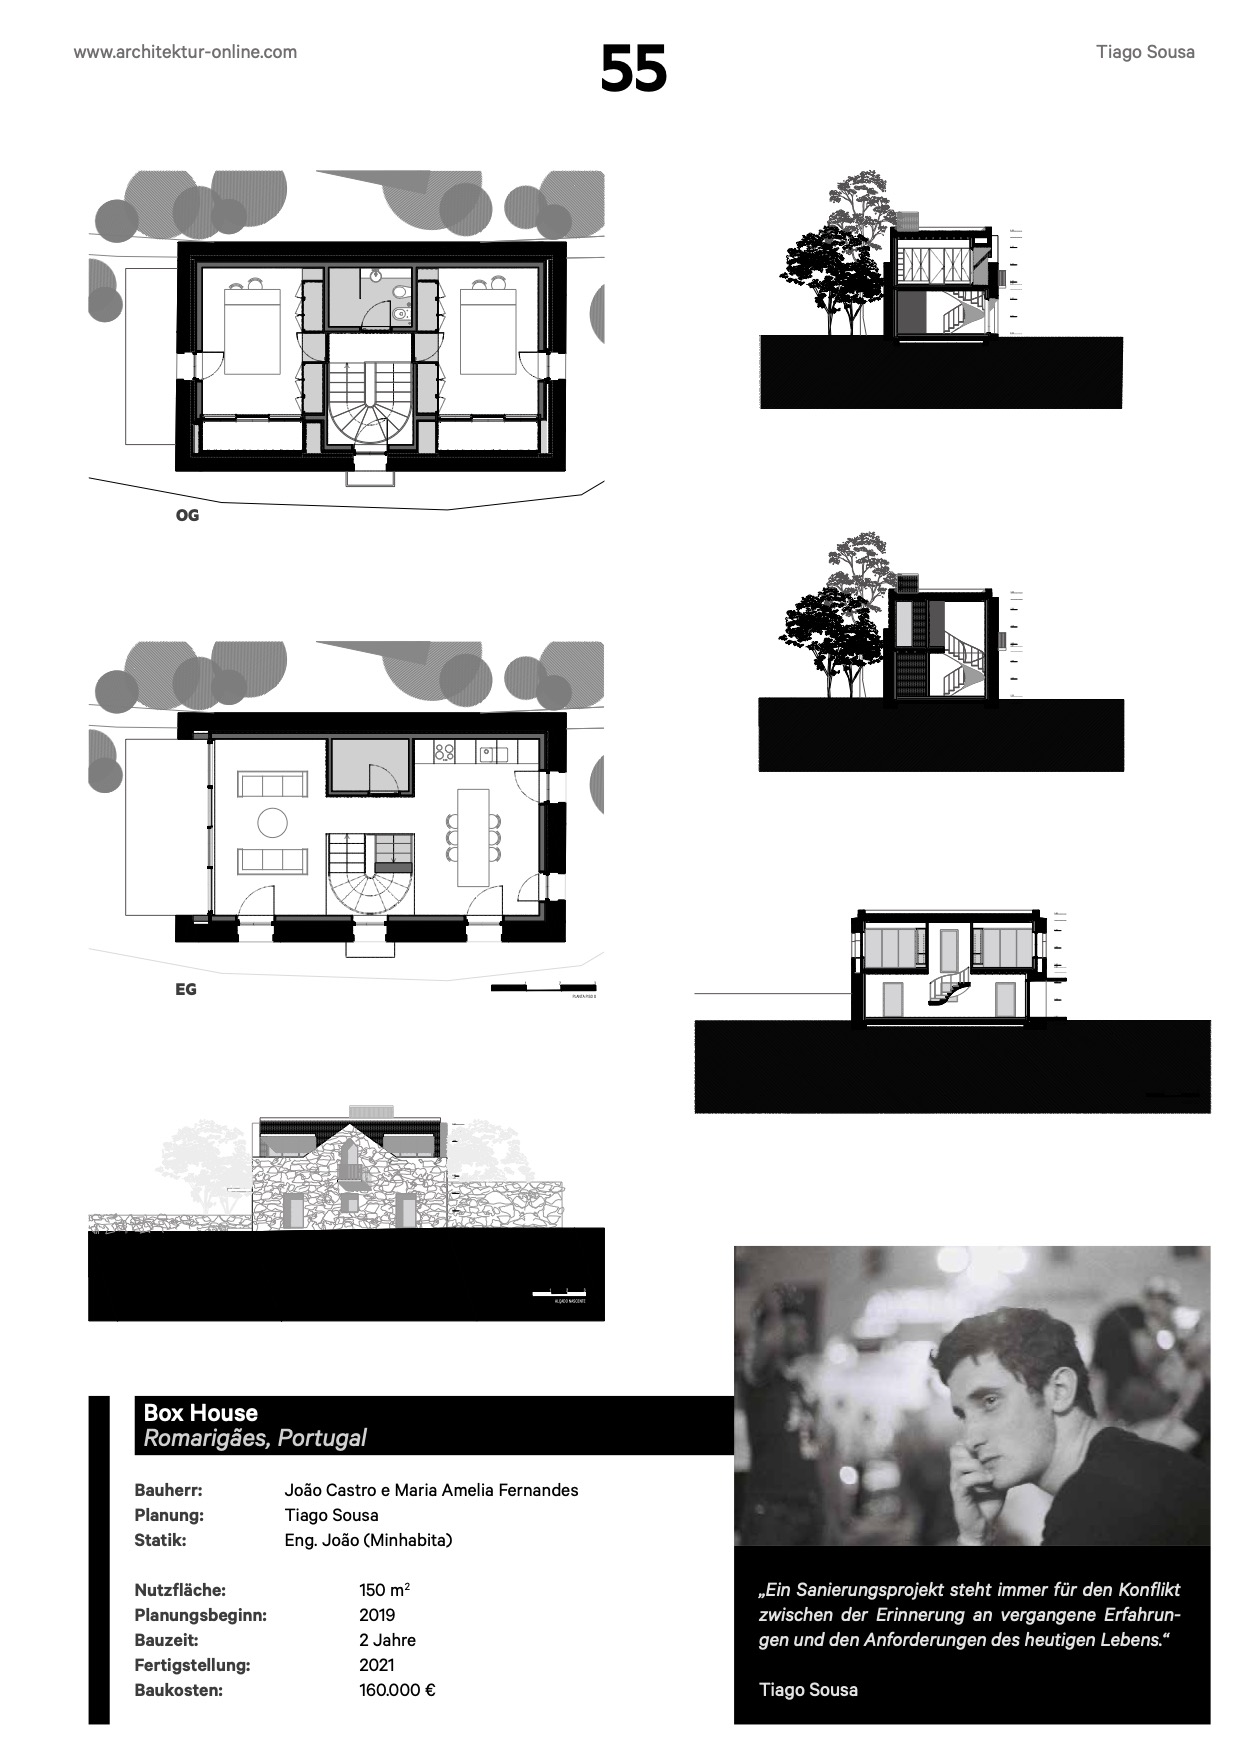 Architektur Sept 2021 do atelier Tiago Sousa Arquitecto com fotografia arquitetura de ivo tavares studio - architectural photography